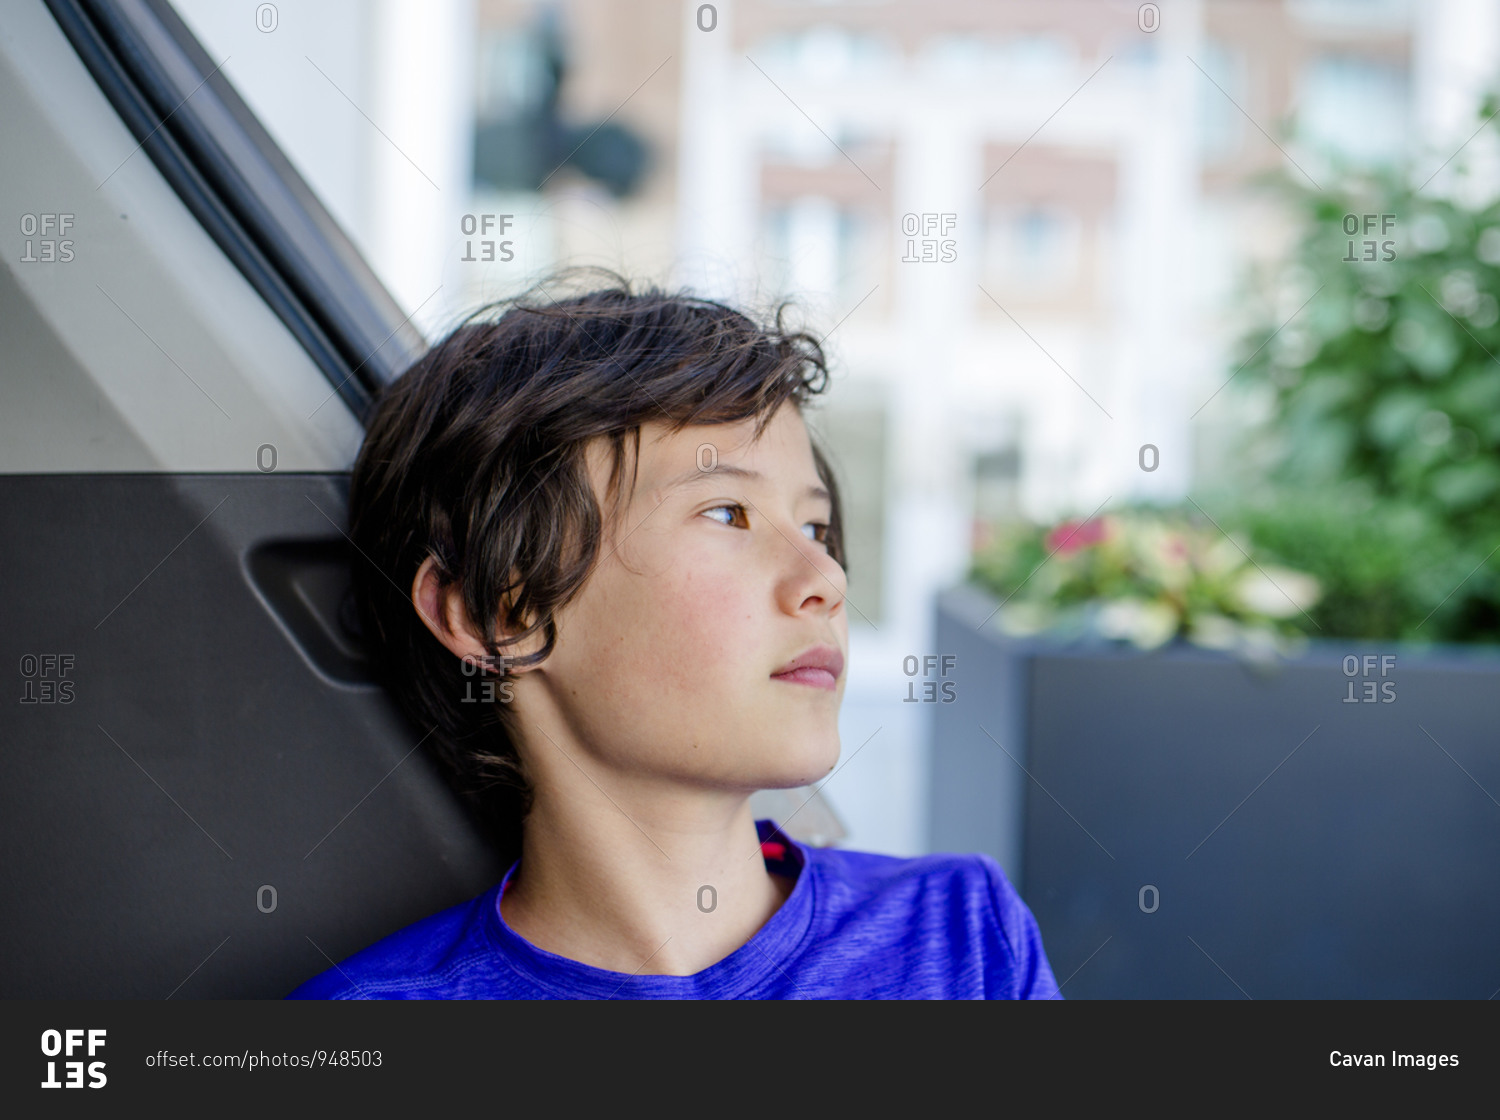 A boy traveling on public transportation gazes out the window